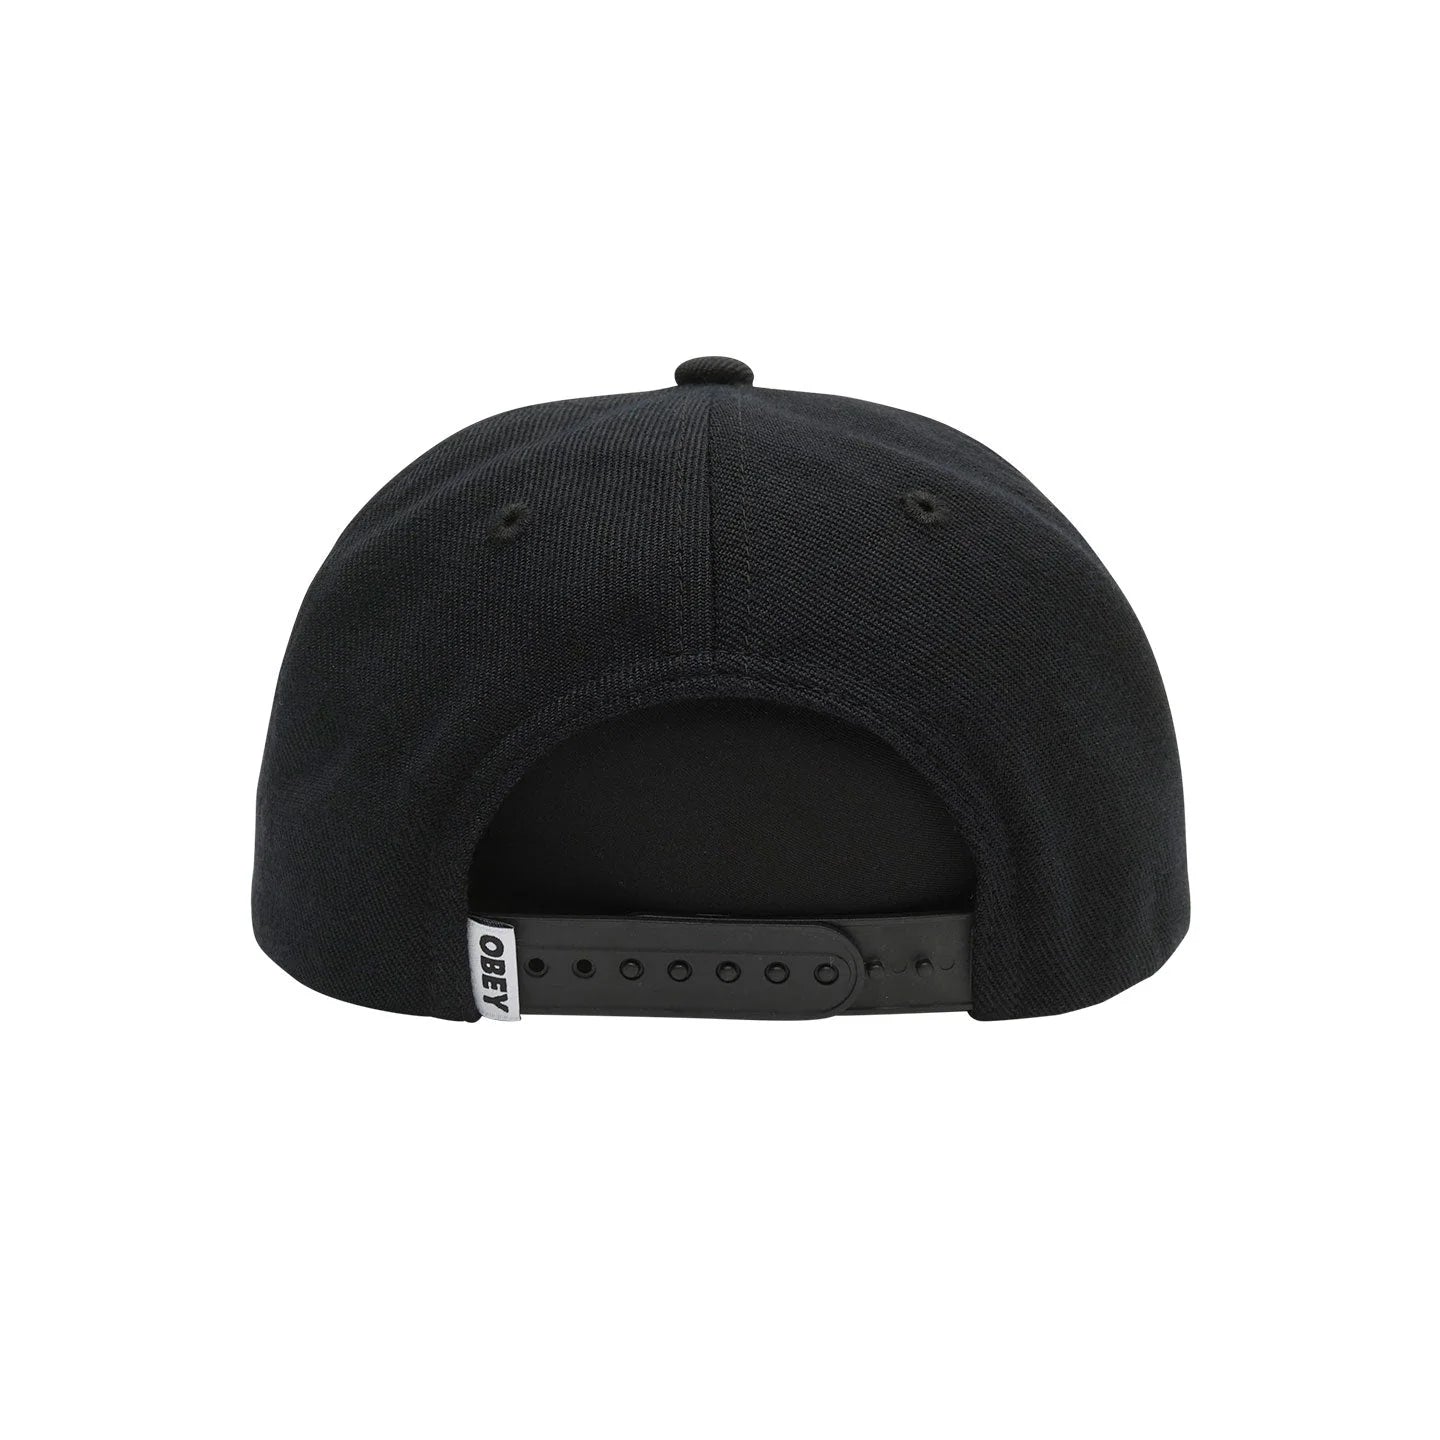 OBEY DAWG 6 PANEL CLASSIC CAP - Black